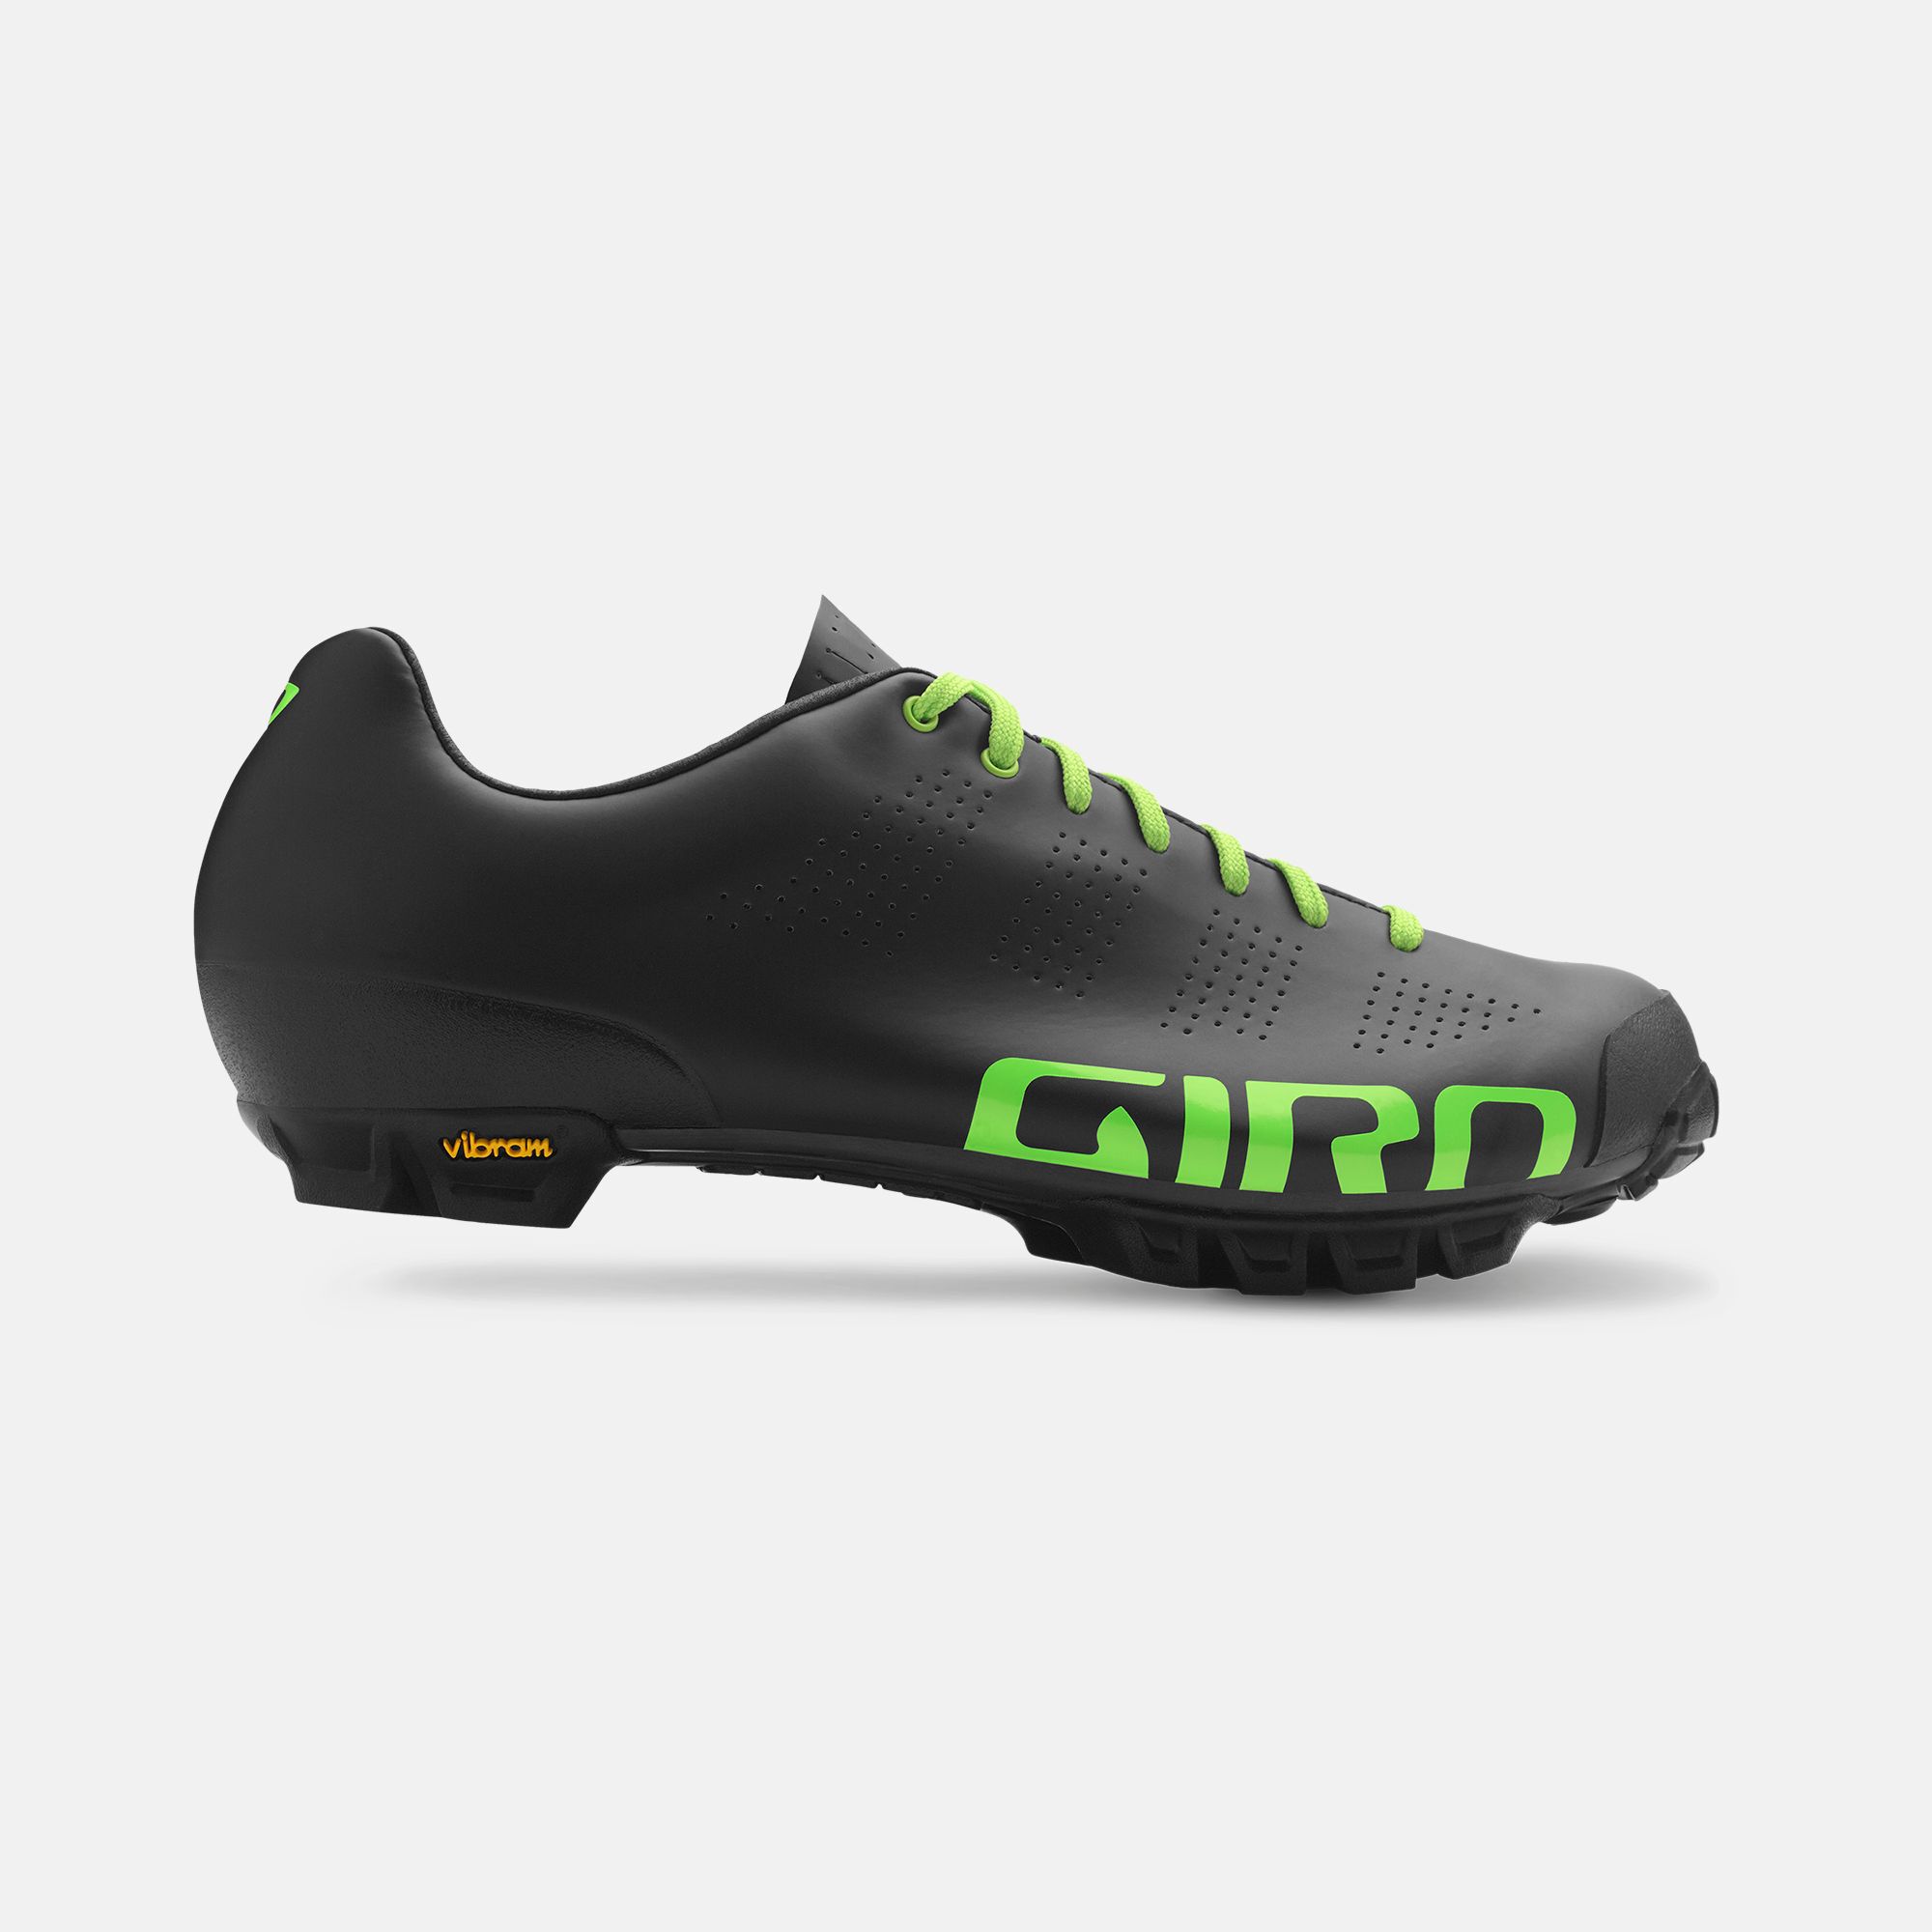 Empire VR90 Shoe | Giro